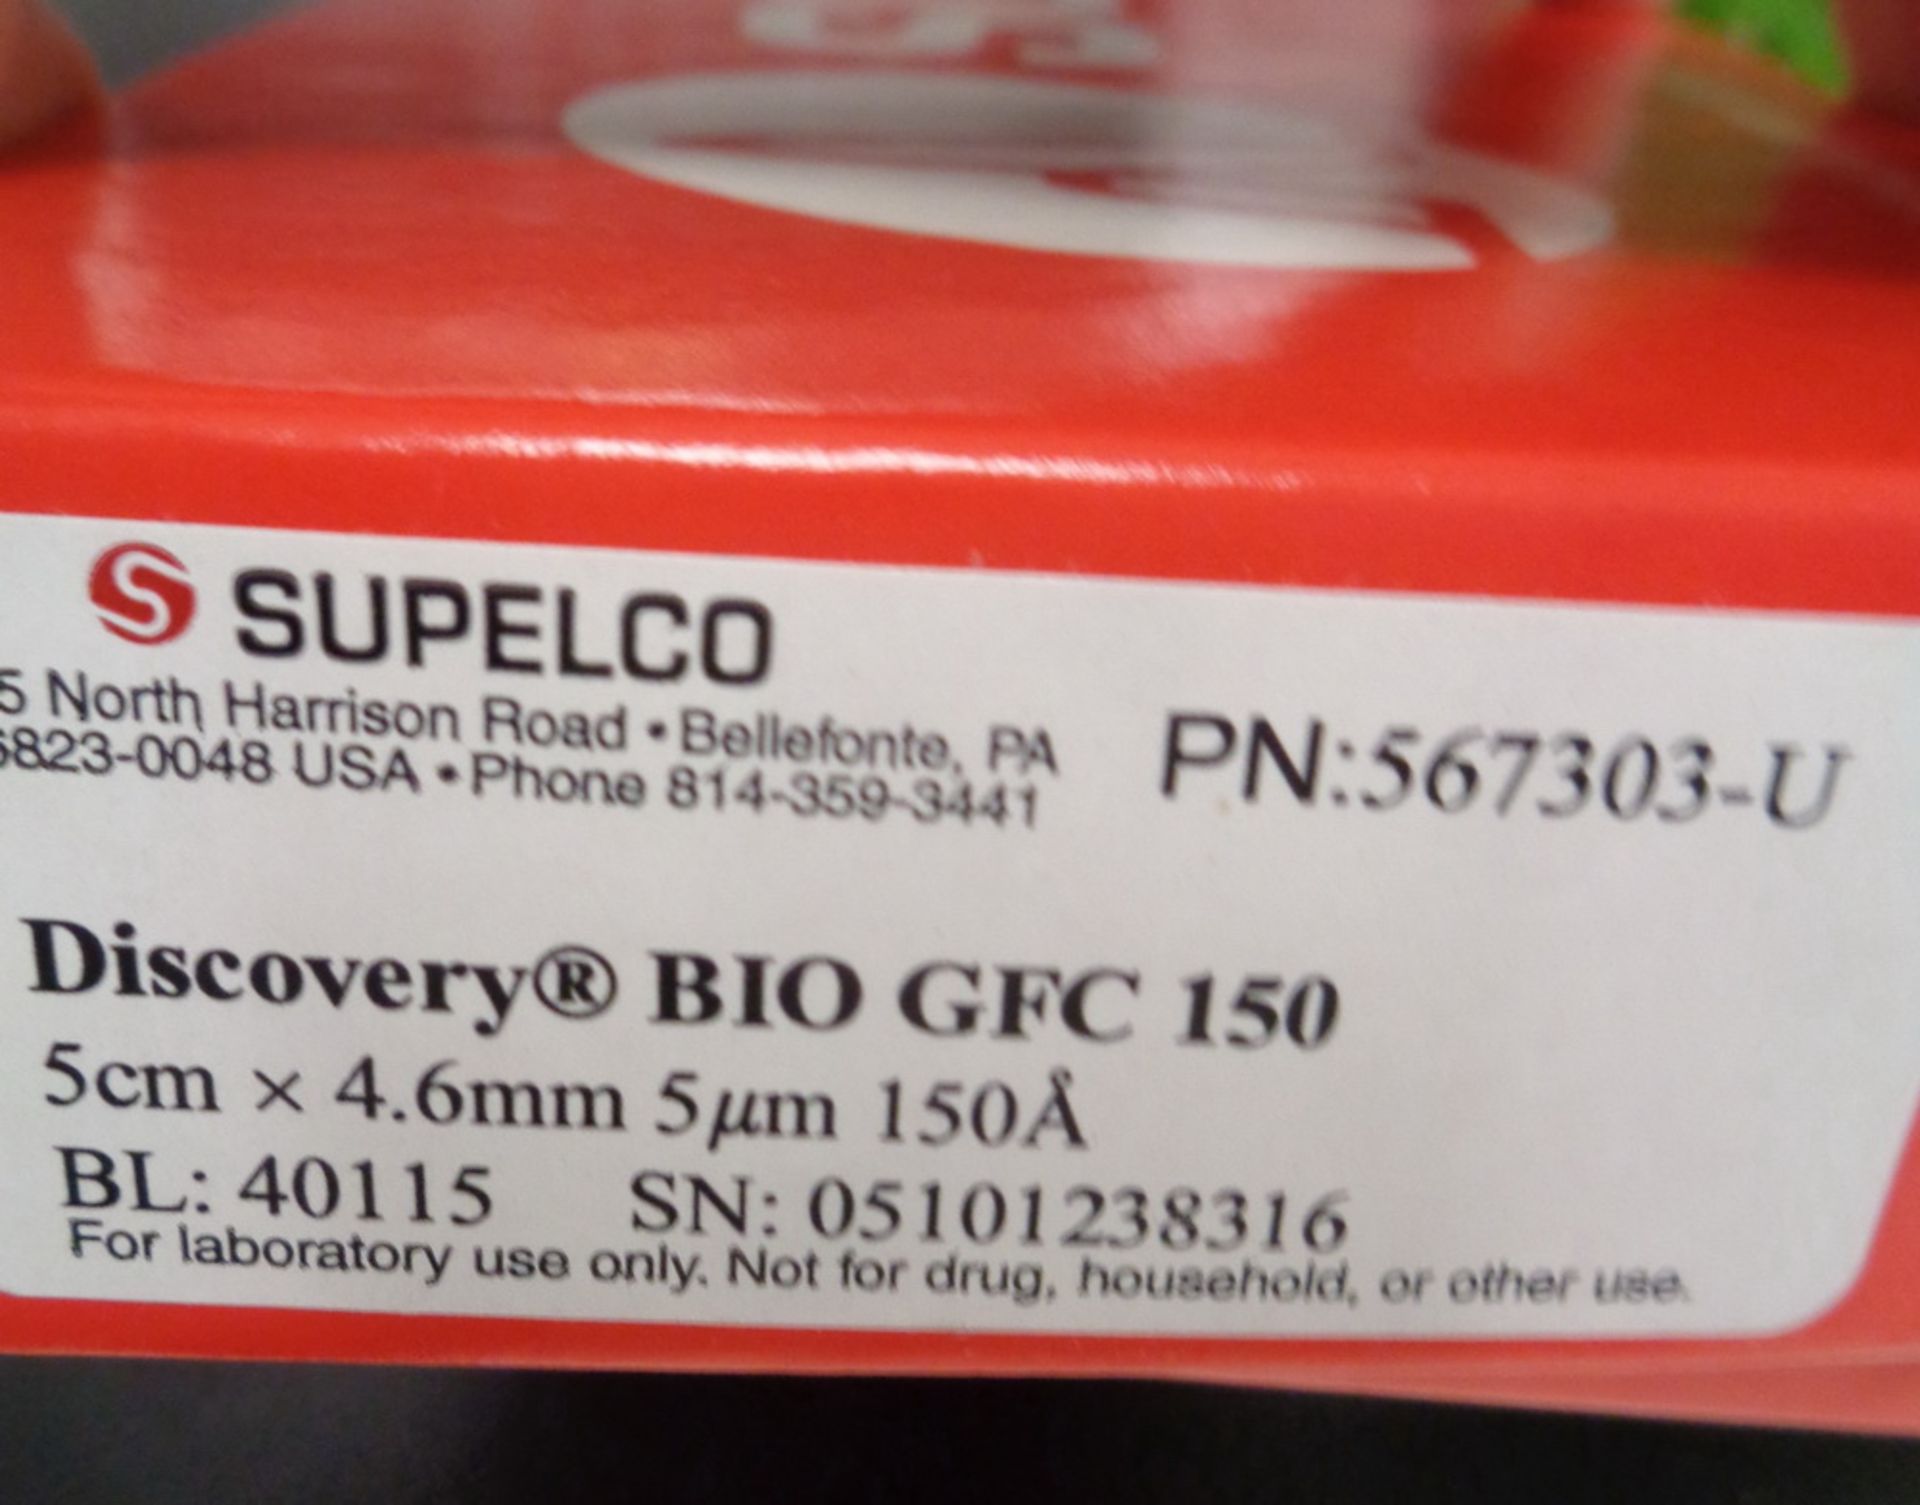 Supelco Discovery Bio GFC 150 HPLC Column, 5cm x 4.6mm, Part # 567303-U